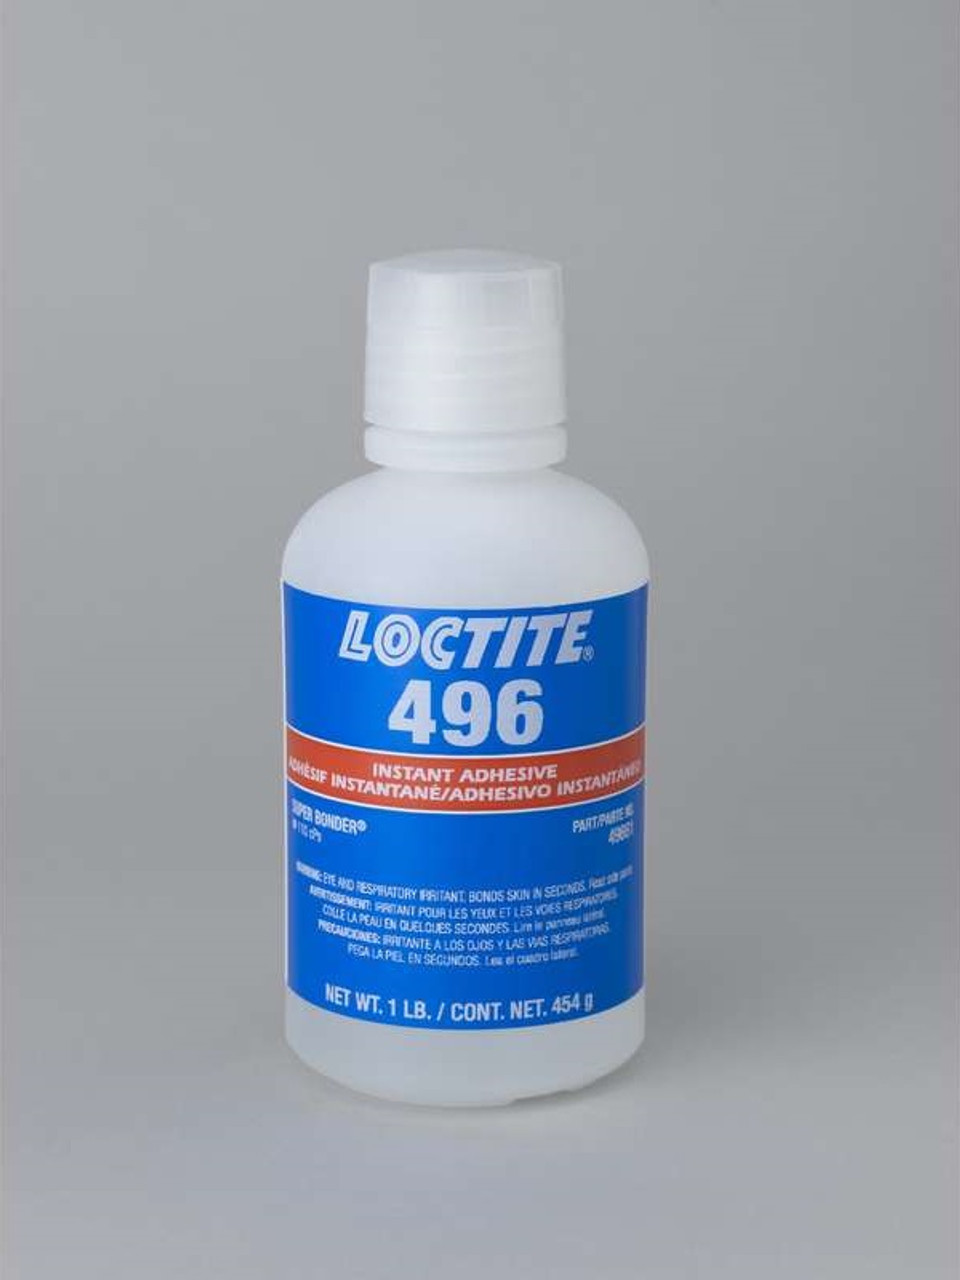 Loctite 496 Cyanoacrylate Adhesive